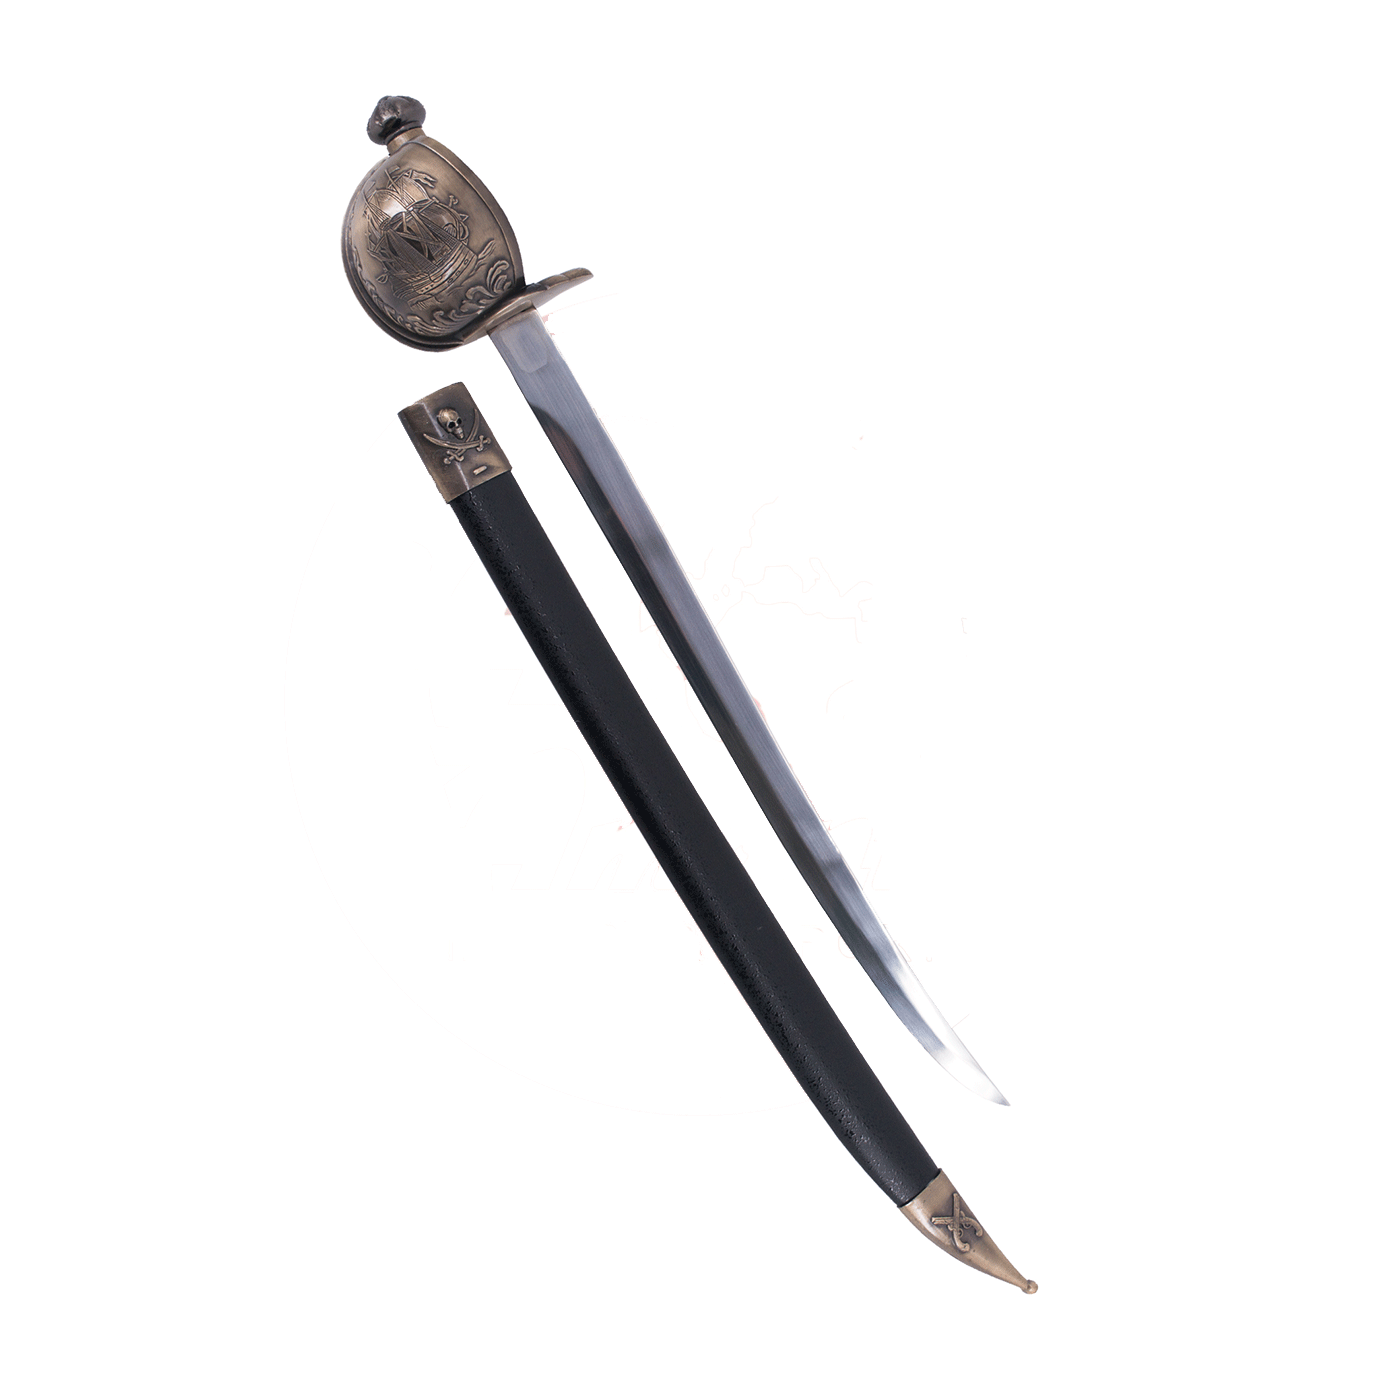 BARBAROSSA PIRATE SWORD/SABER 80cm STEEL BLADE